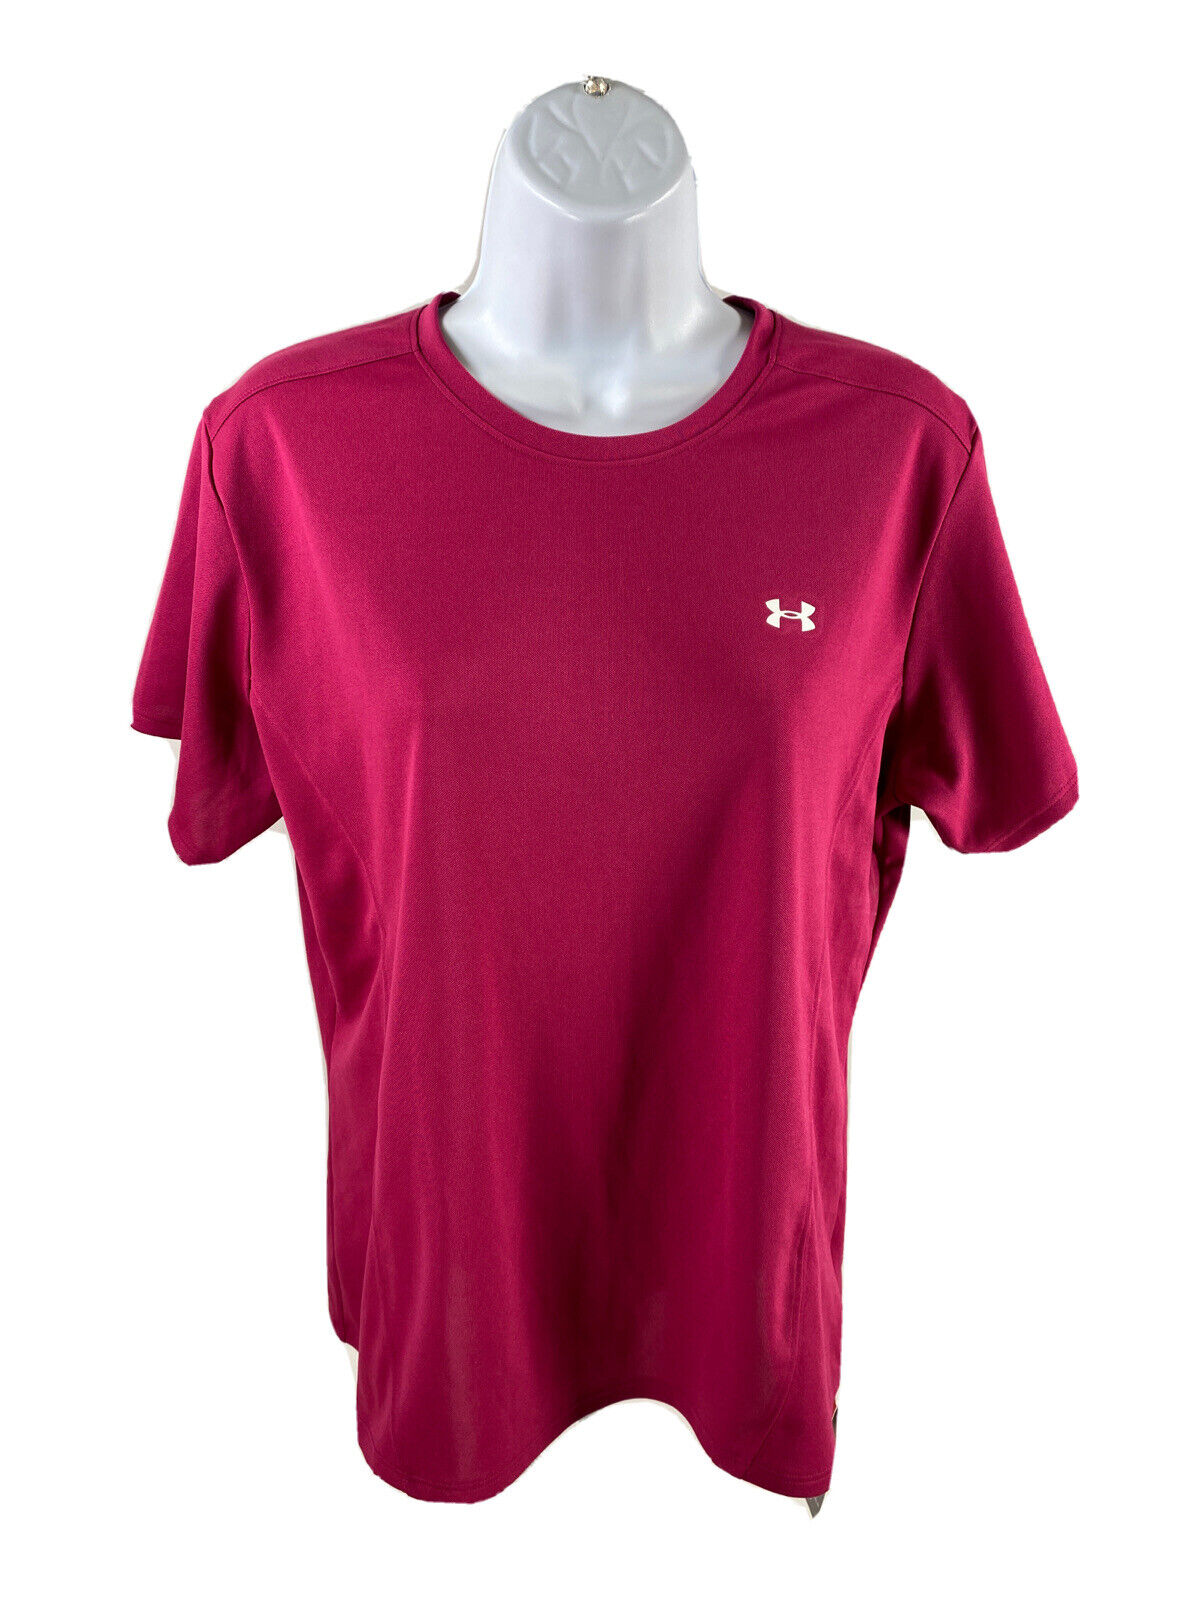 NEW Under Armour Women's Purple Short Sleeve Athletic Shirt - L